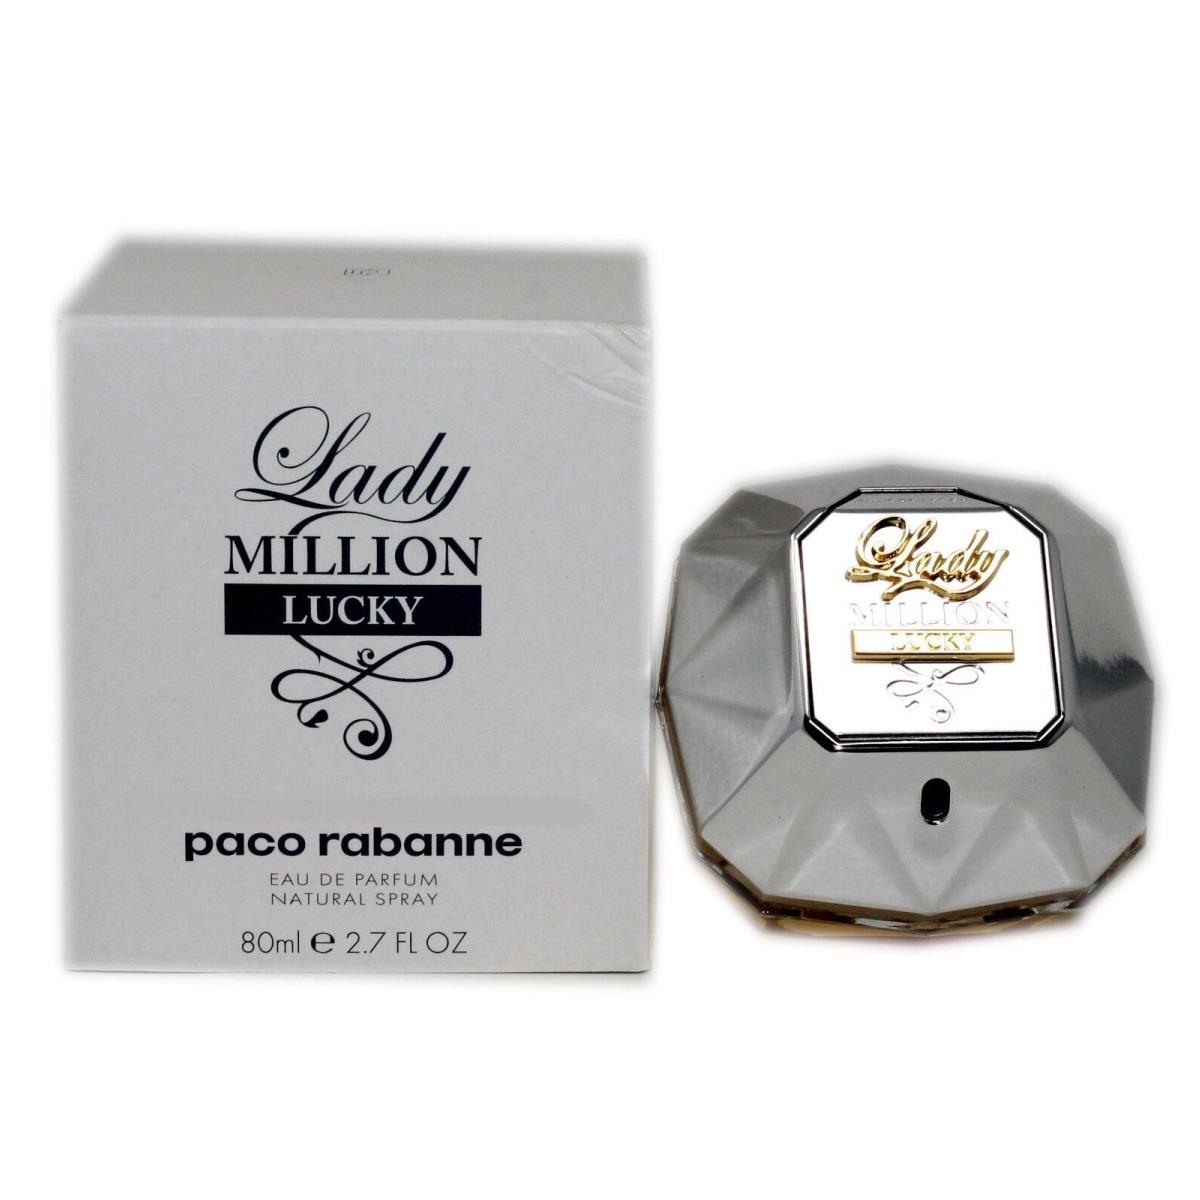 Paco Rabanne Lady Million Lucky Eau DE Parfum Spray 80 ML/2.7 Fl.oz. T